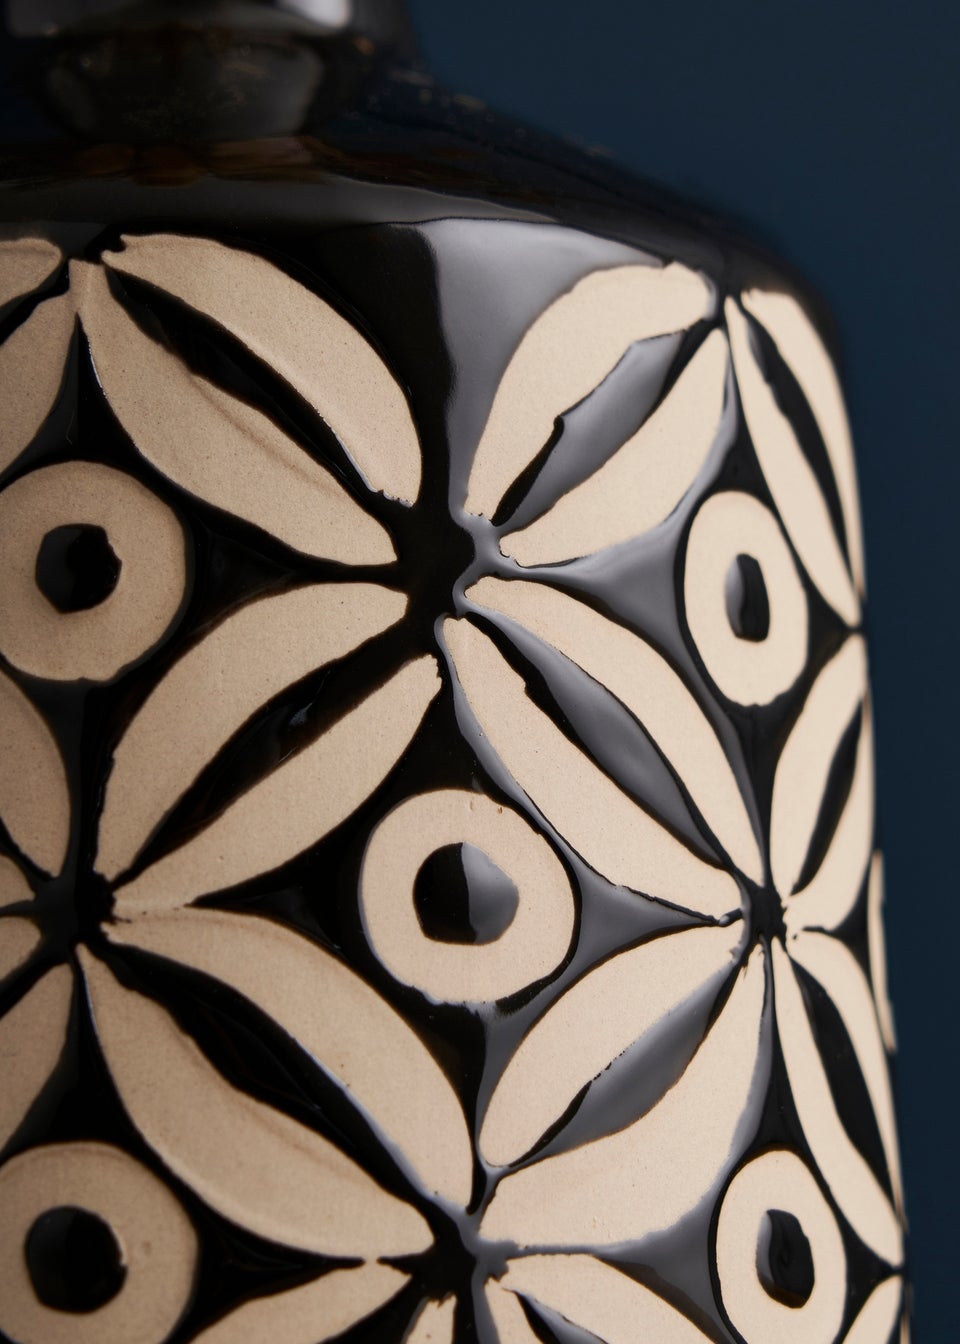 BHS Small Patterned Ceramic Vase Black